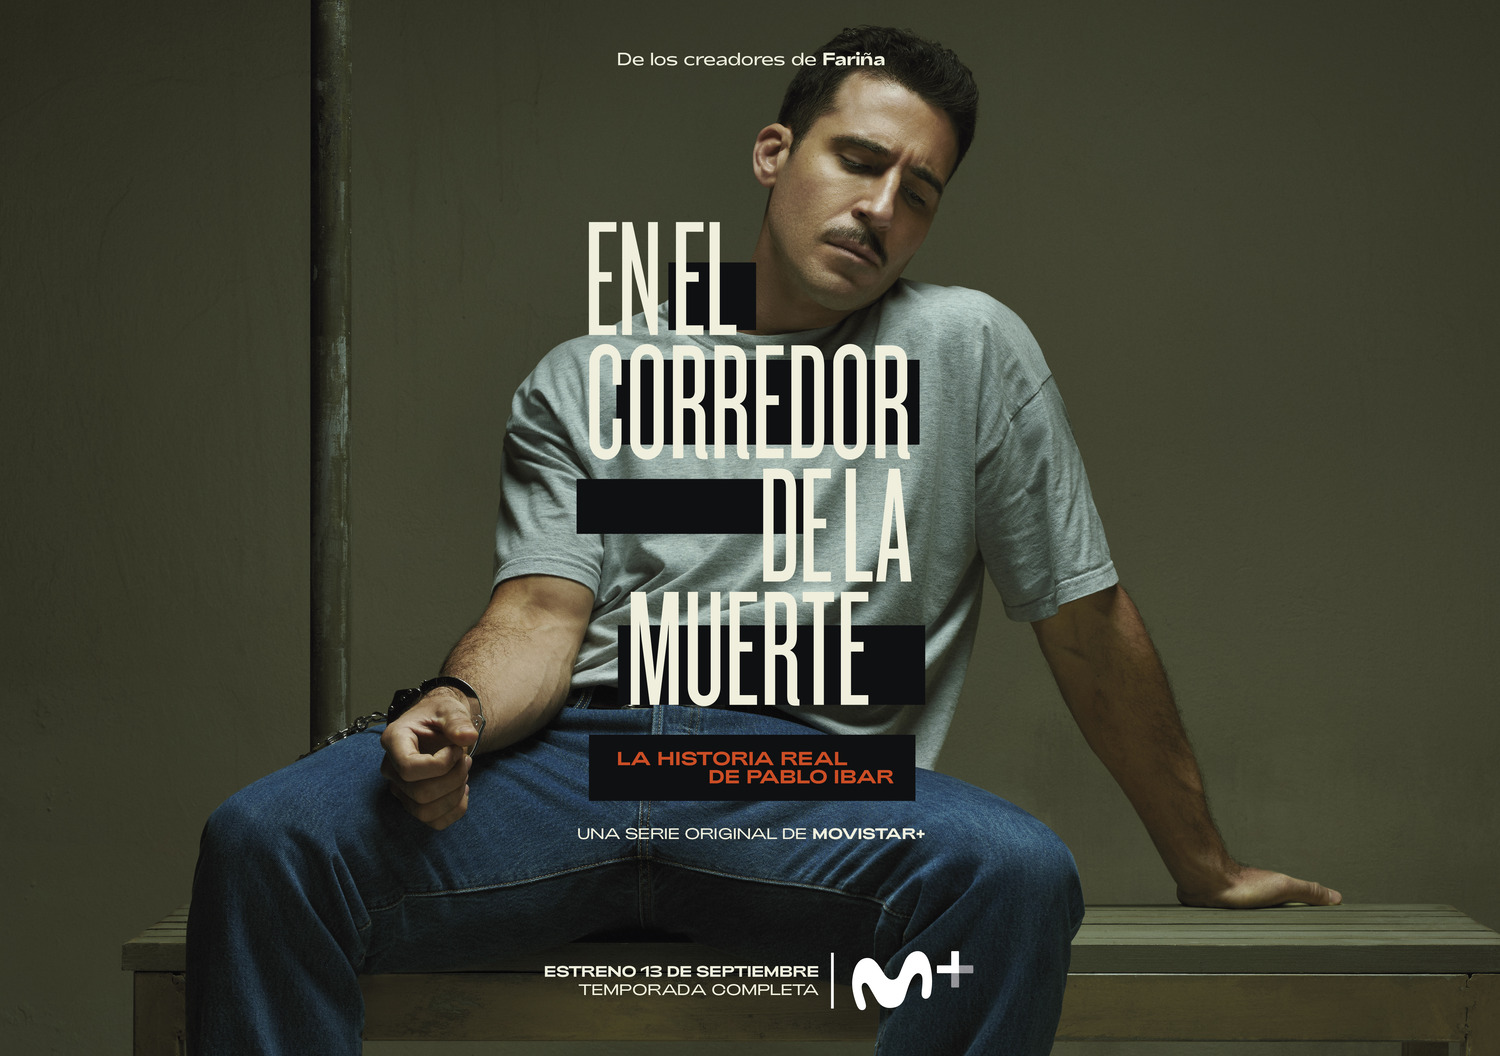 Extra Large TV Poster Image for En el corredor de la muerte (#1 of 4)